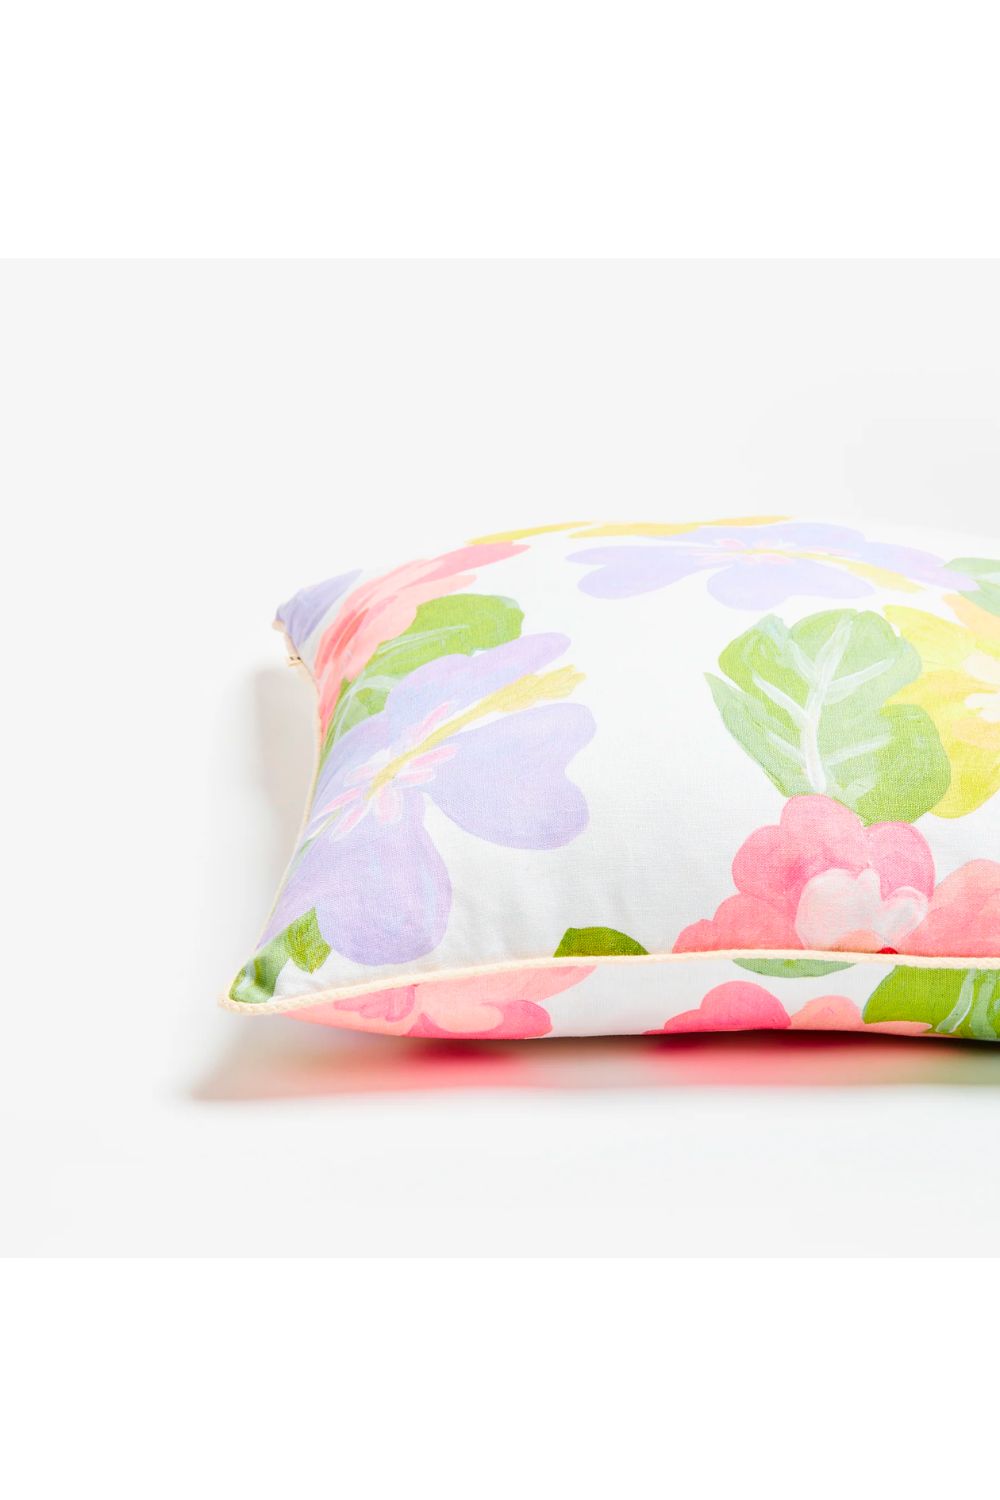 Bonnie & Neil Moana Floral Multi 50cm Cushion